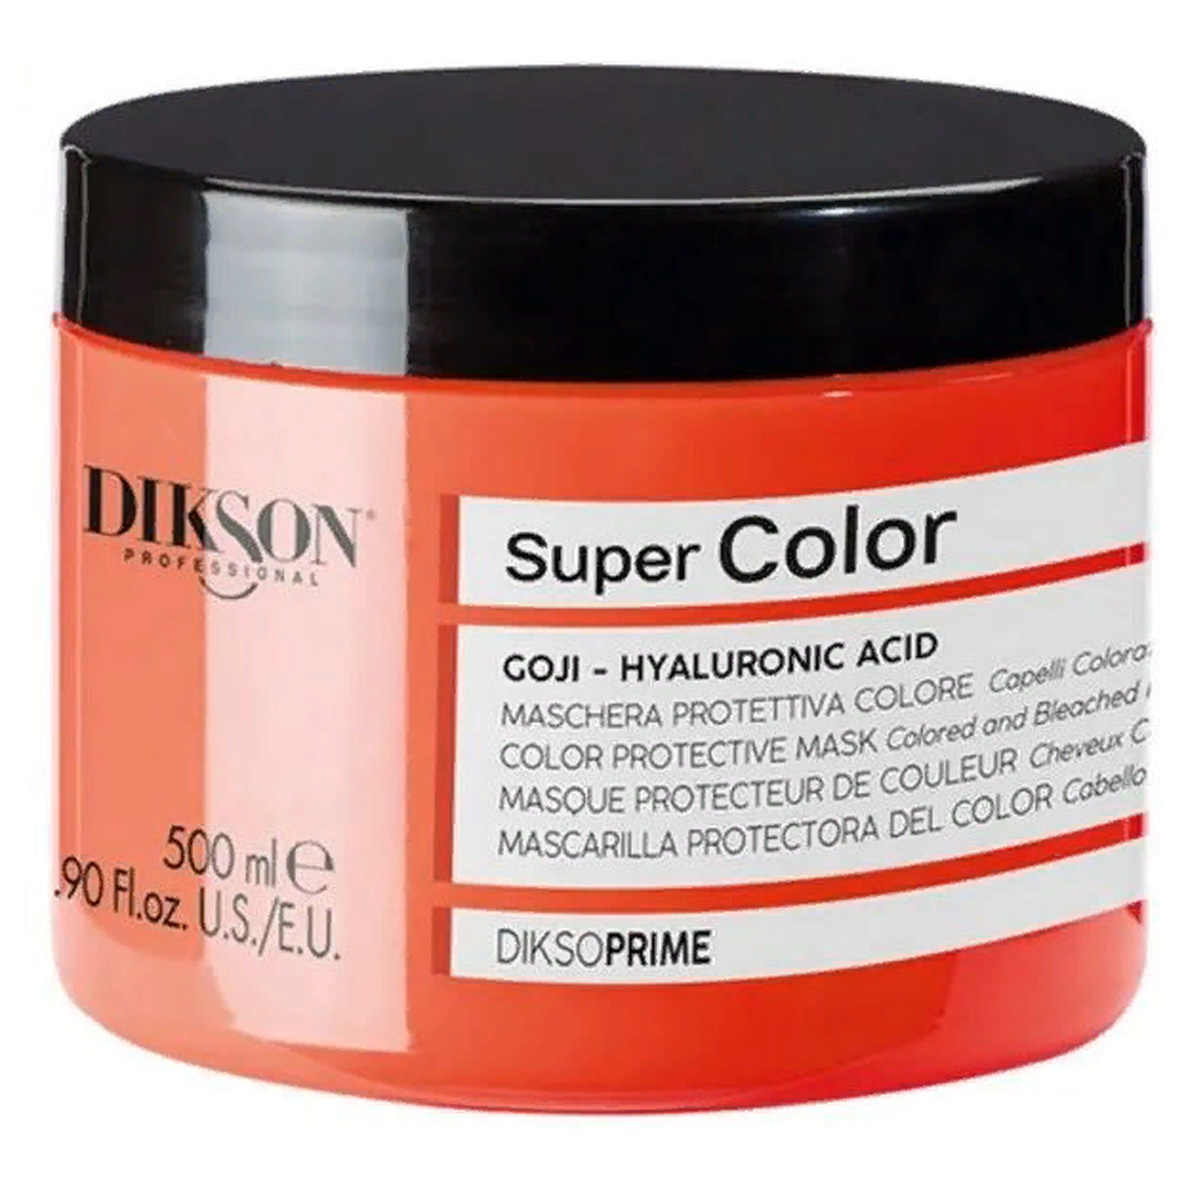 Dikson Маска для защиты цвета окрашенных и обесцвеченных волос Color Protective Mask, 500 мл (Dikson, DiksoPrime)